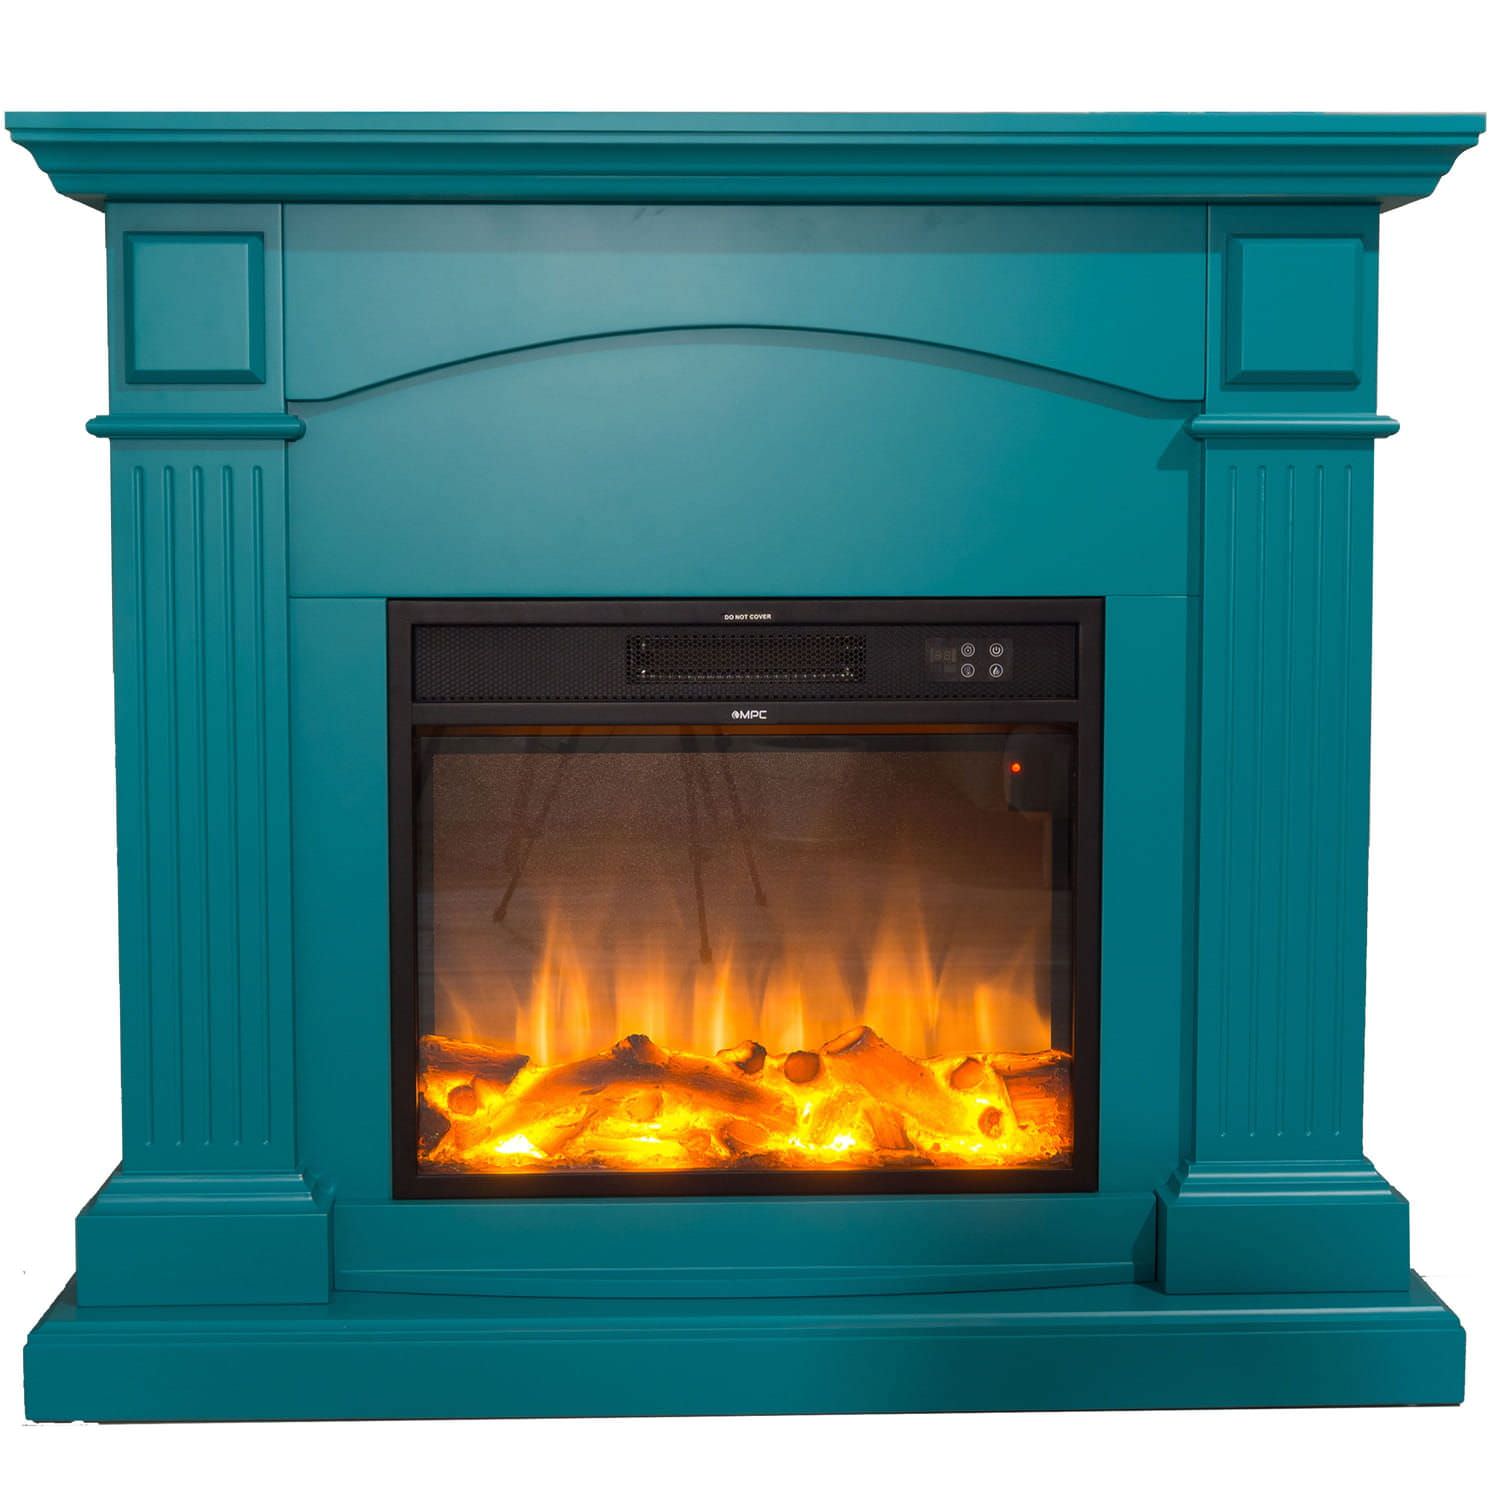 Turquoise Floor Fireplace